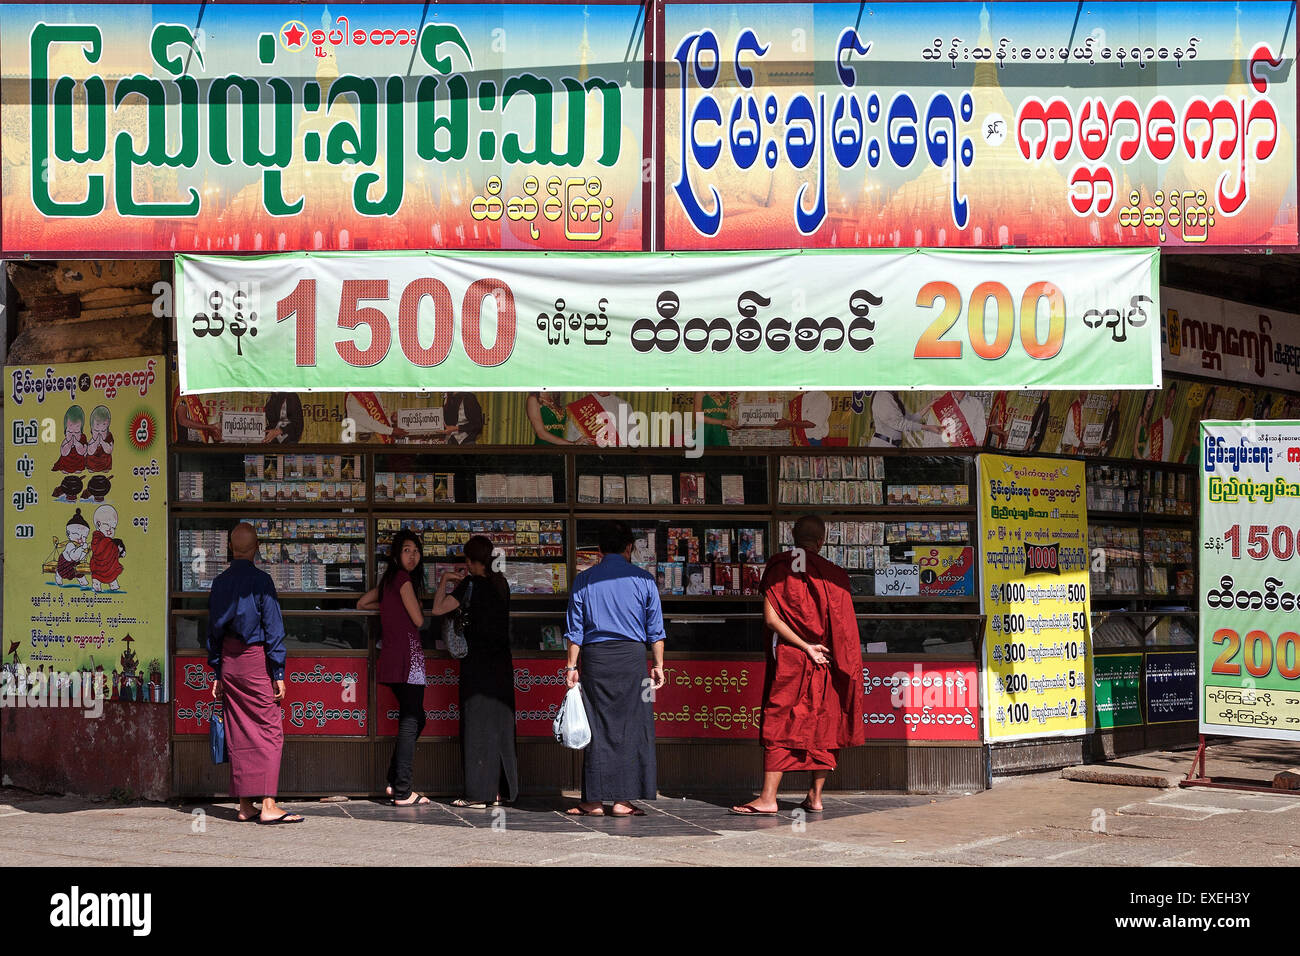 Street scene, stall, shop, Yangon, Myanmar Stock Photo